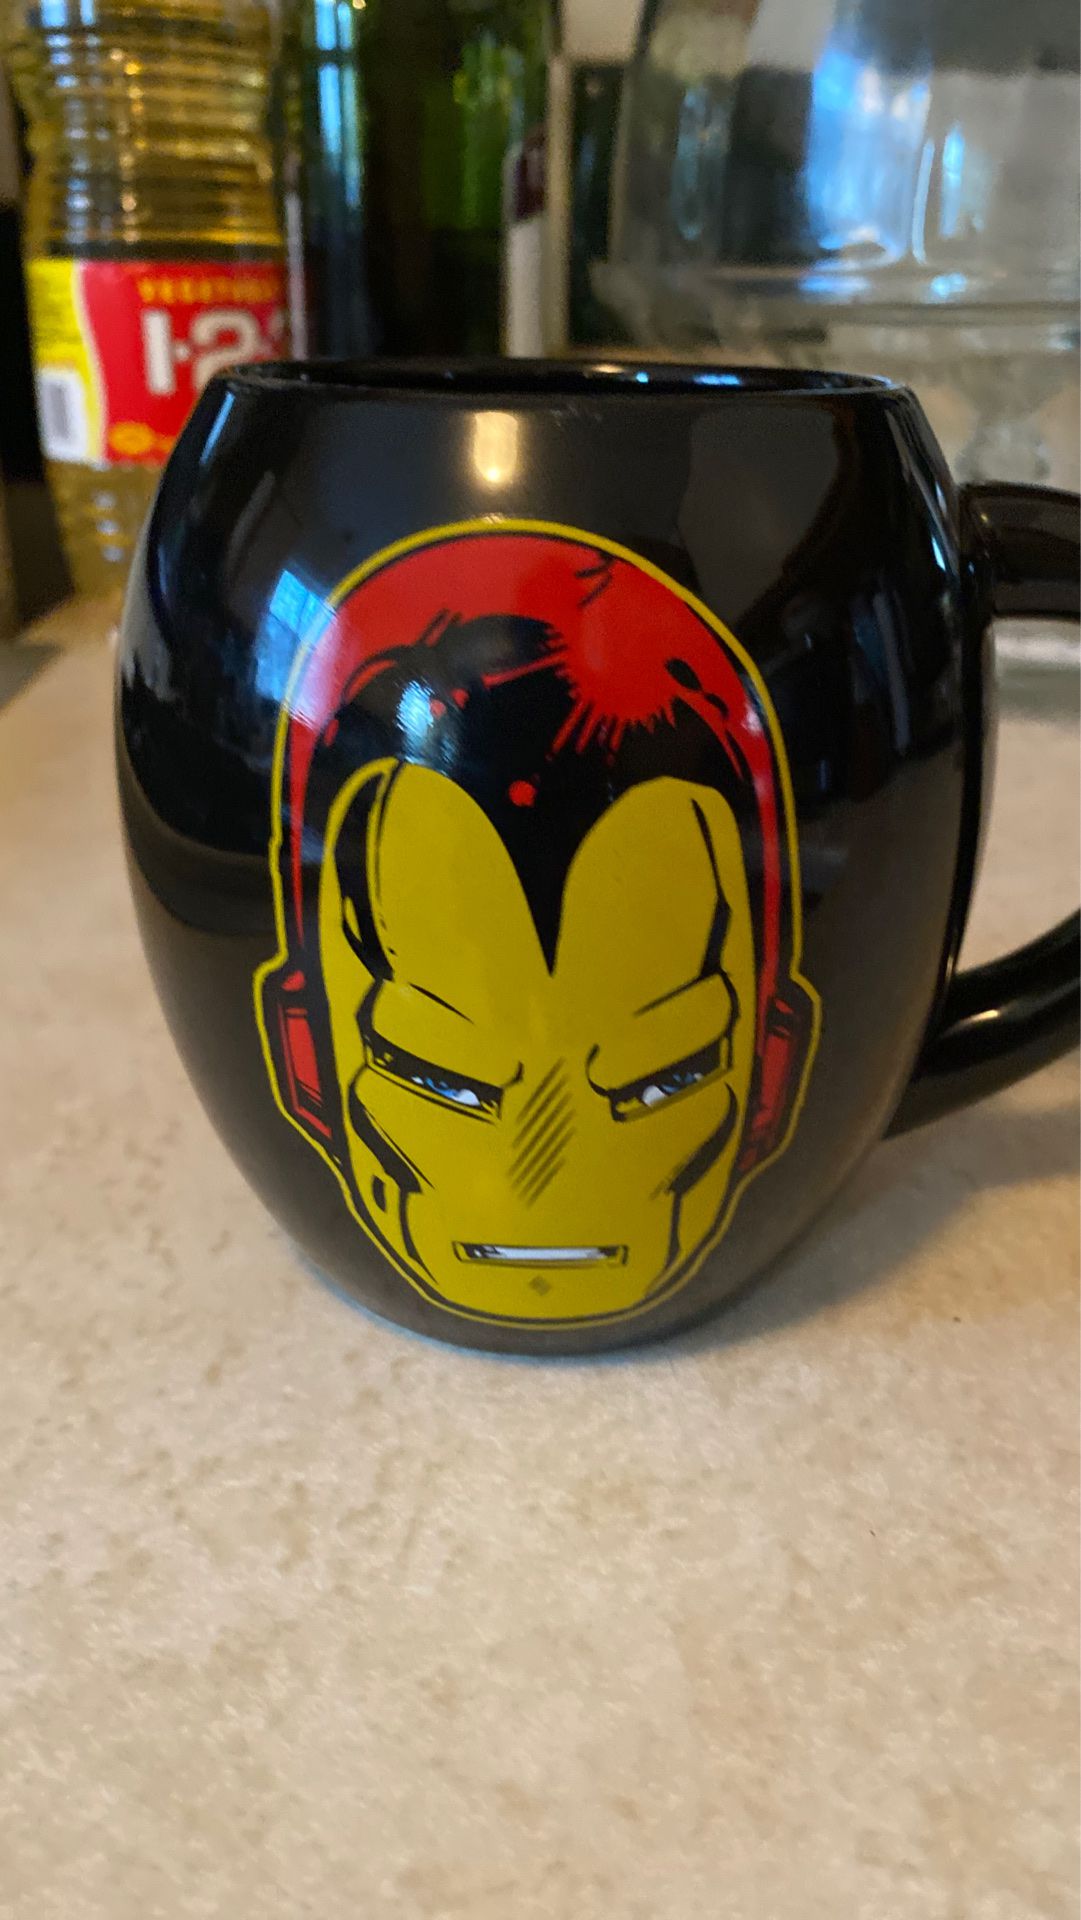 Marvel Iron Man 18 oz Oval Mug, Black, Yellow, and Red